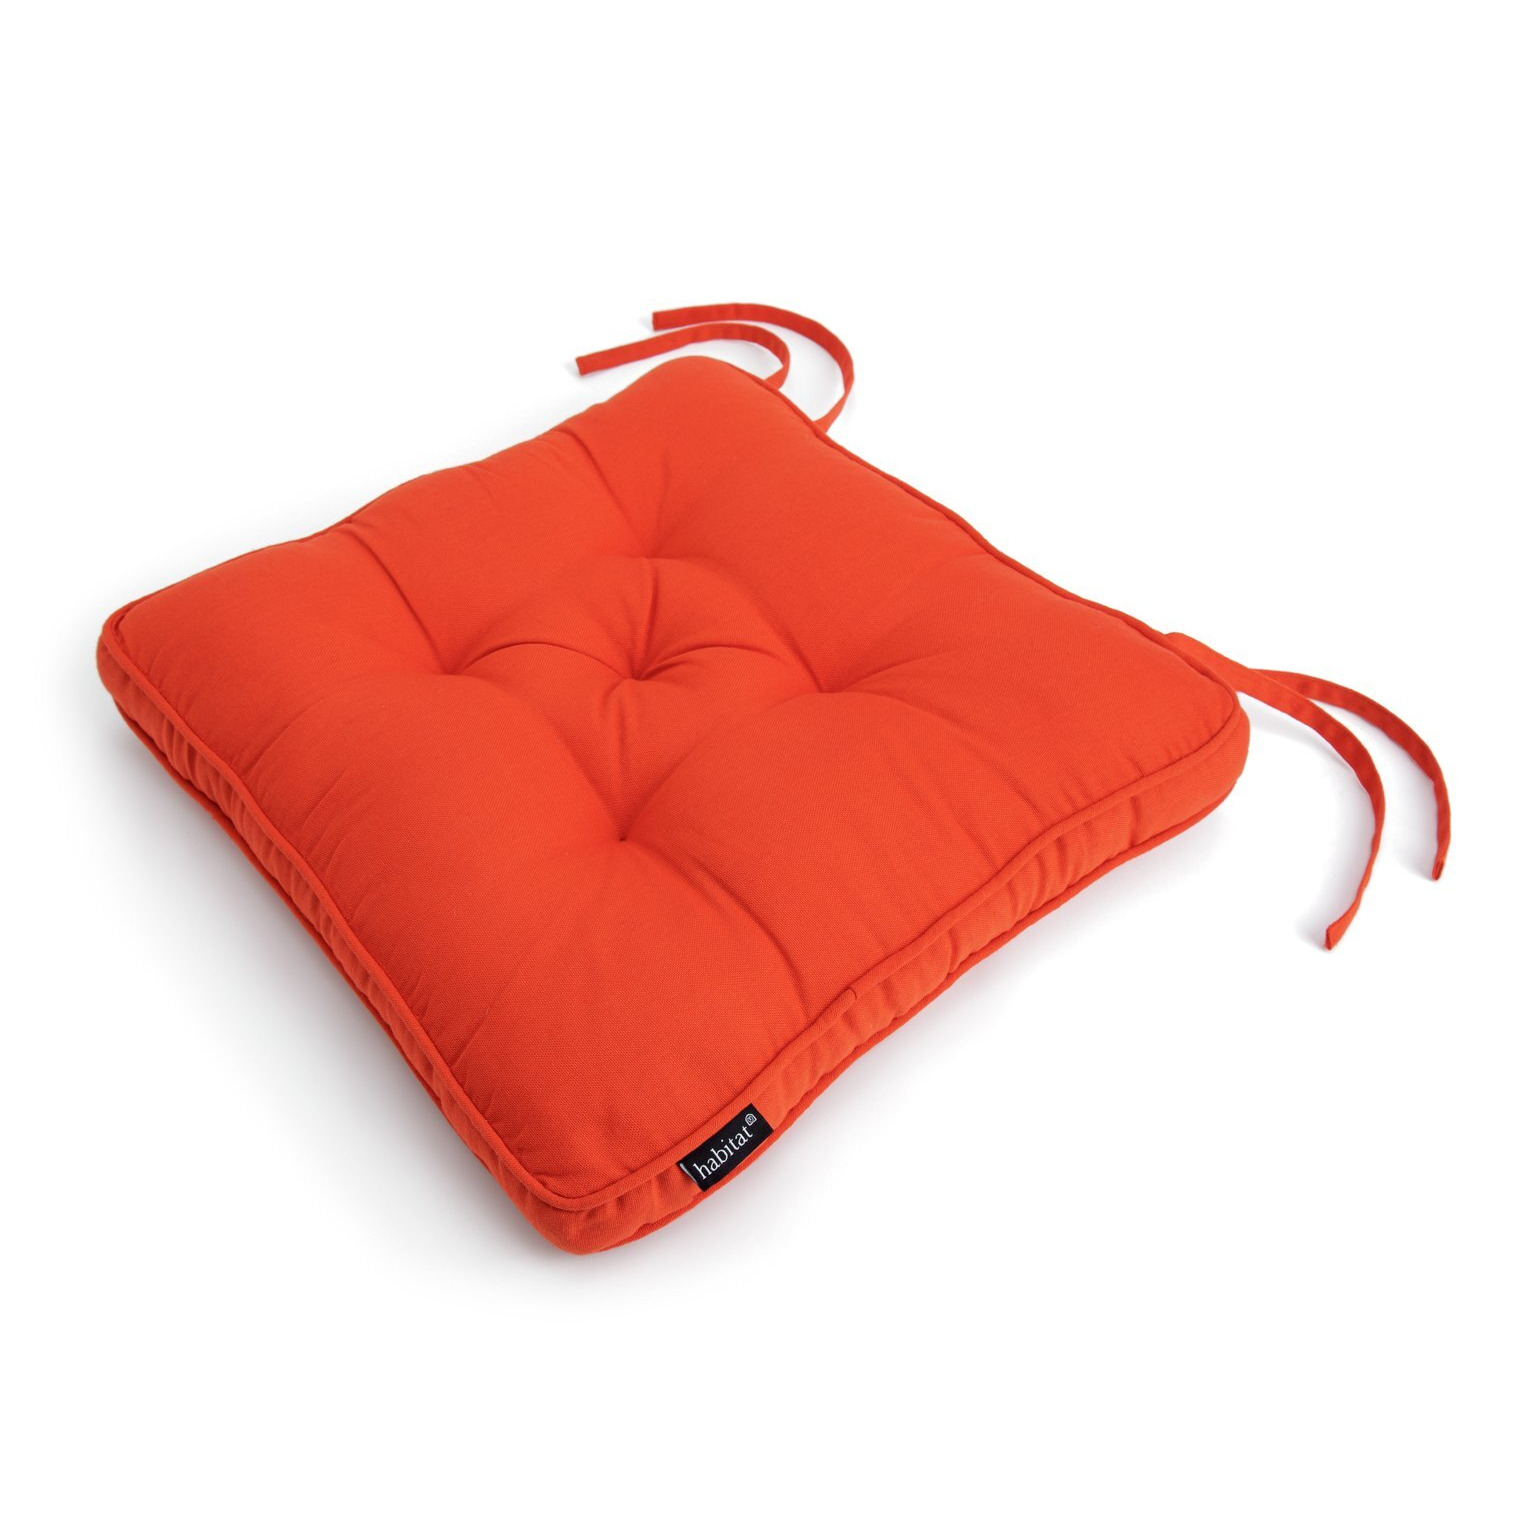 Habitat Festive Pack of 2 Seat Cushion - Red - image 1